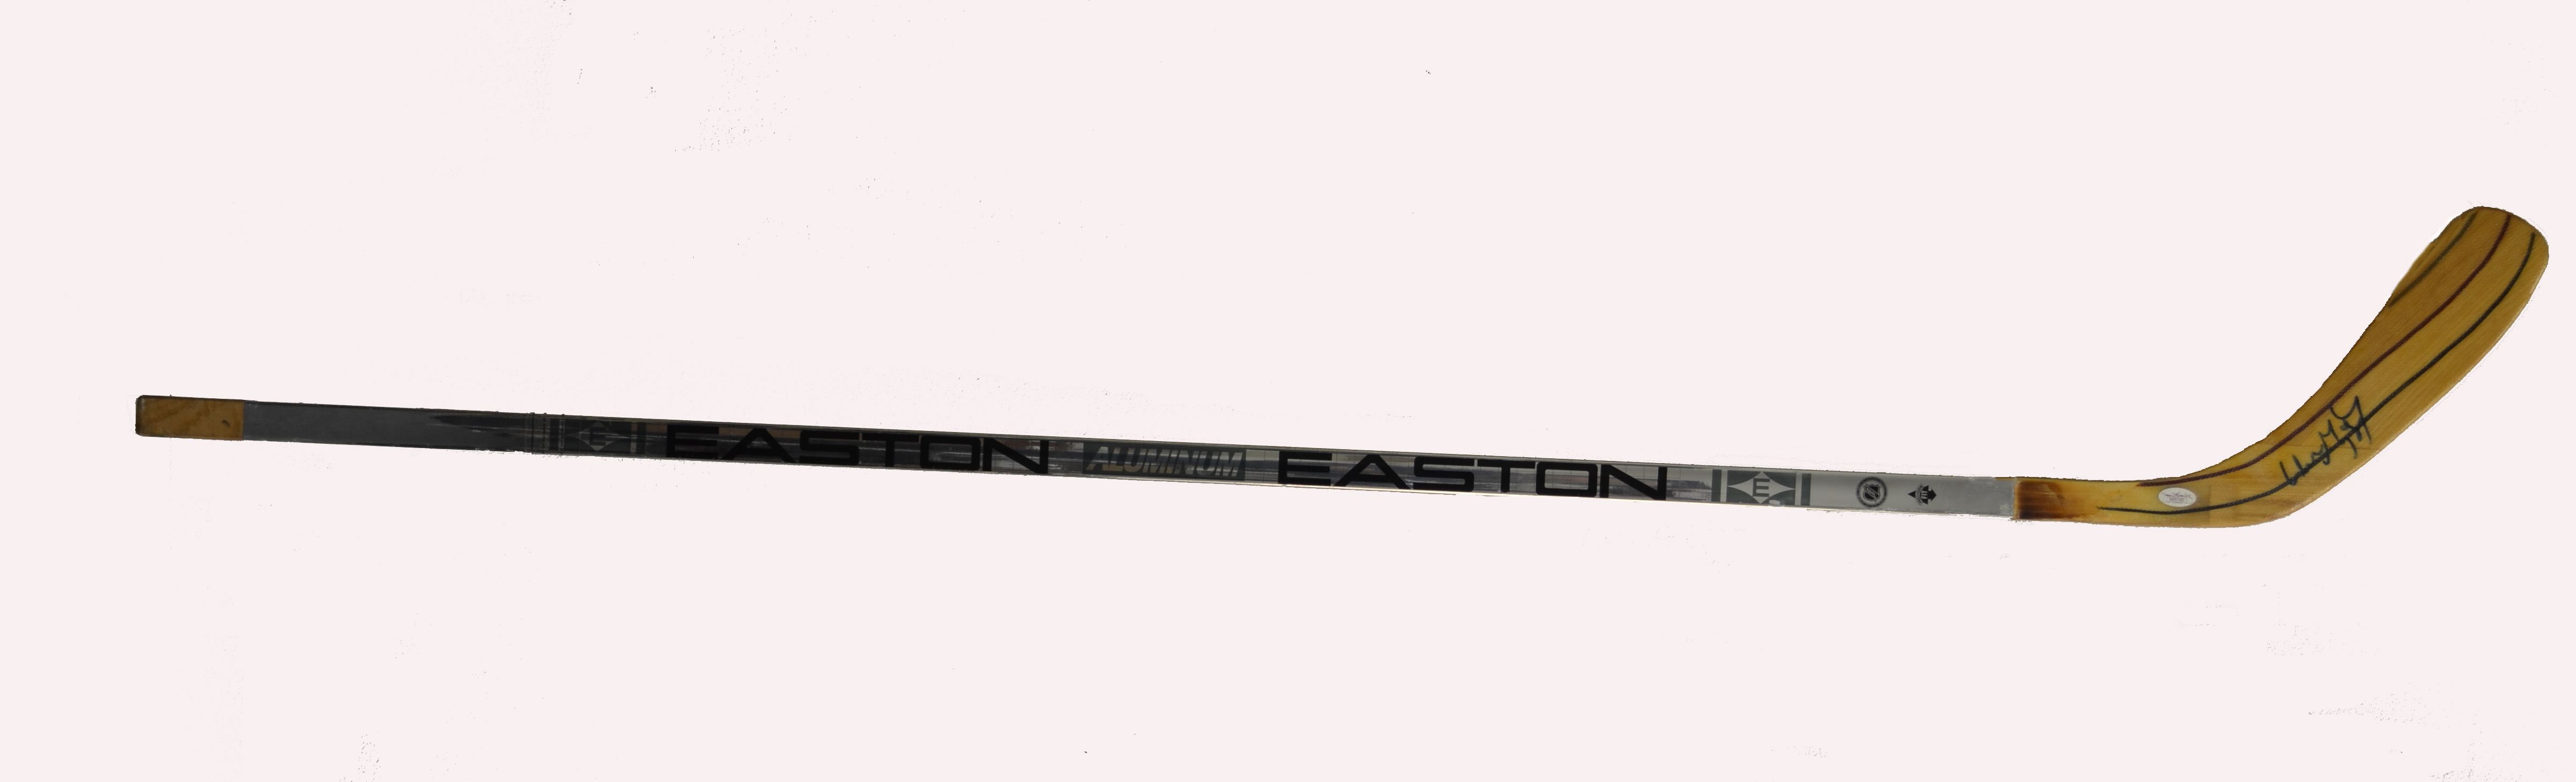 Lot Detail - Wayne Gretzky Signed Easton Hockey Stick